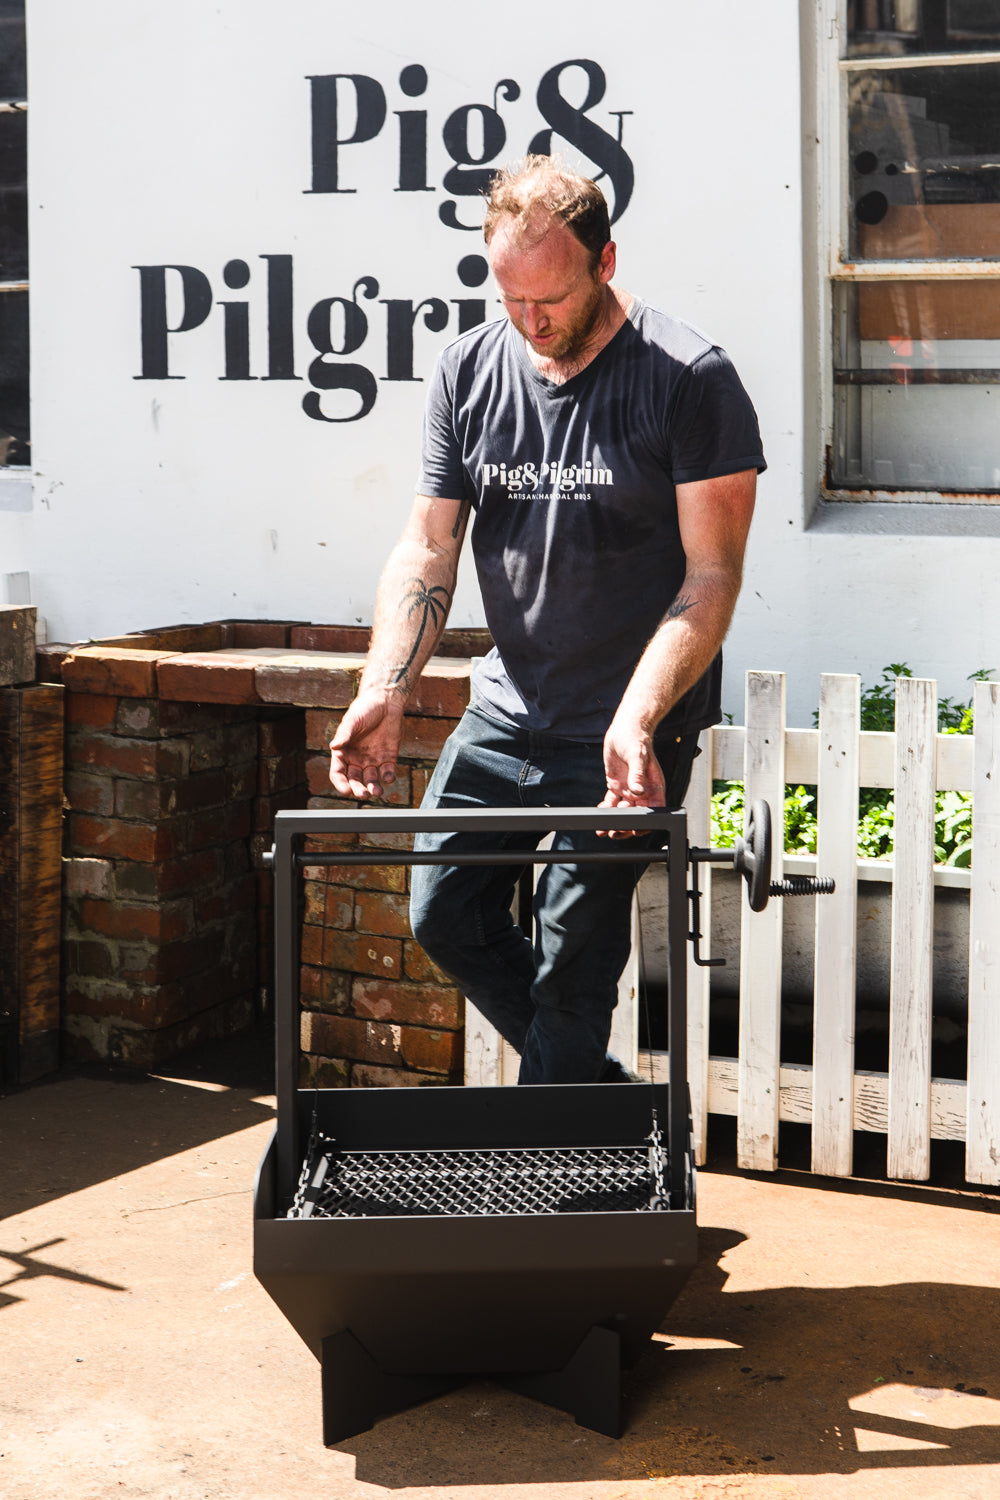 The Pig & Pilgrim Small Firepit